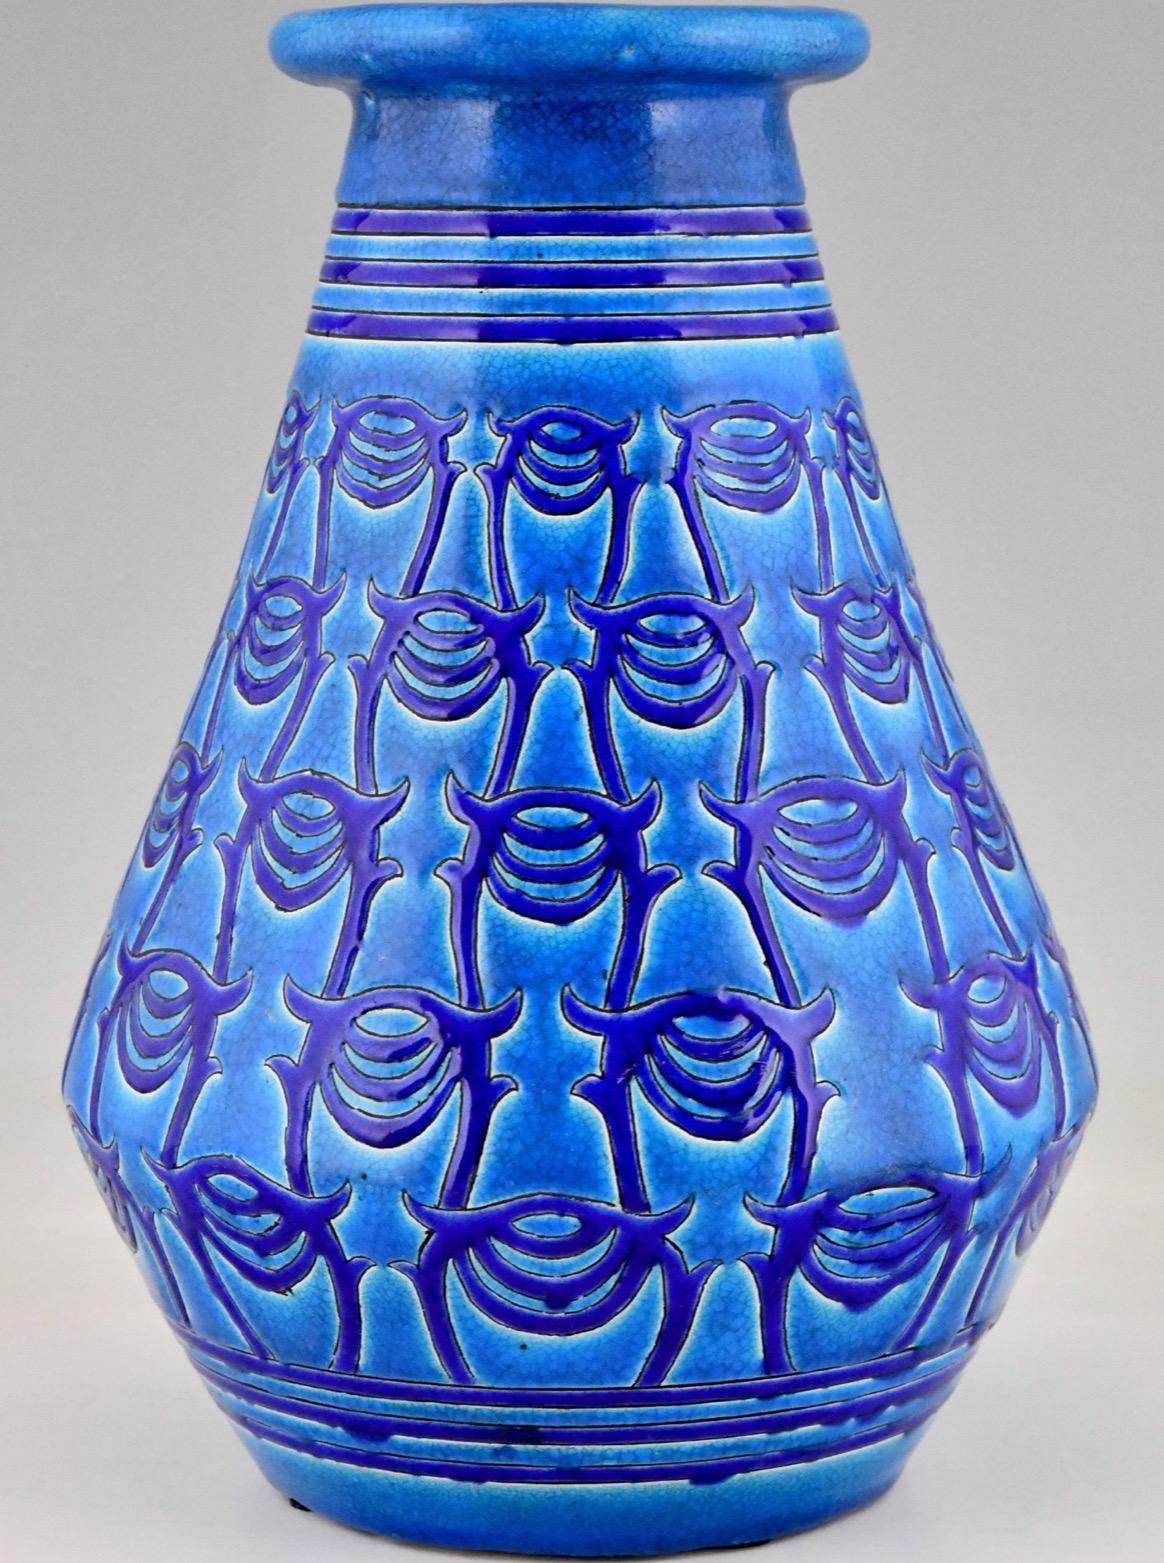 Blue Art Deco vase, made of ceramics. Atelier Primavera, Longwy.  France, 1927. This vase was designed in 1919.
“Les Grands Magasins du Printemps” is a fine Longwy Primavera Art Deco ceramic vase. Longwy made this French Art Deco vase for Atelier